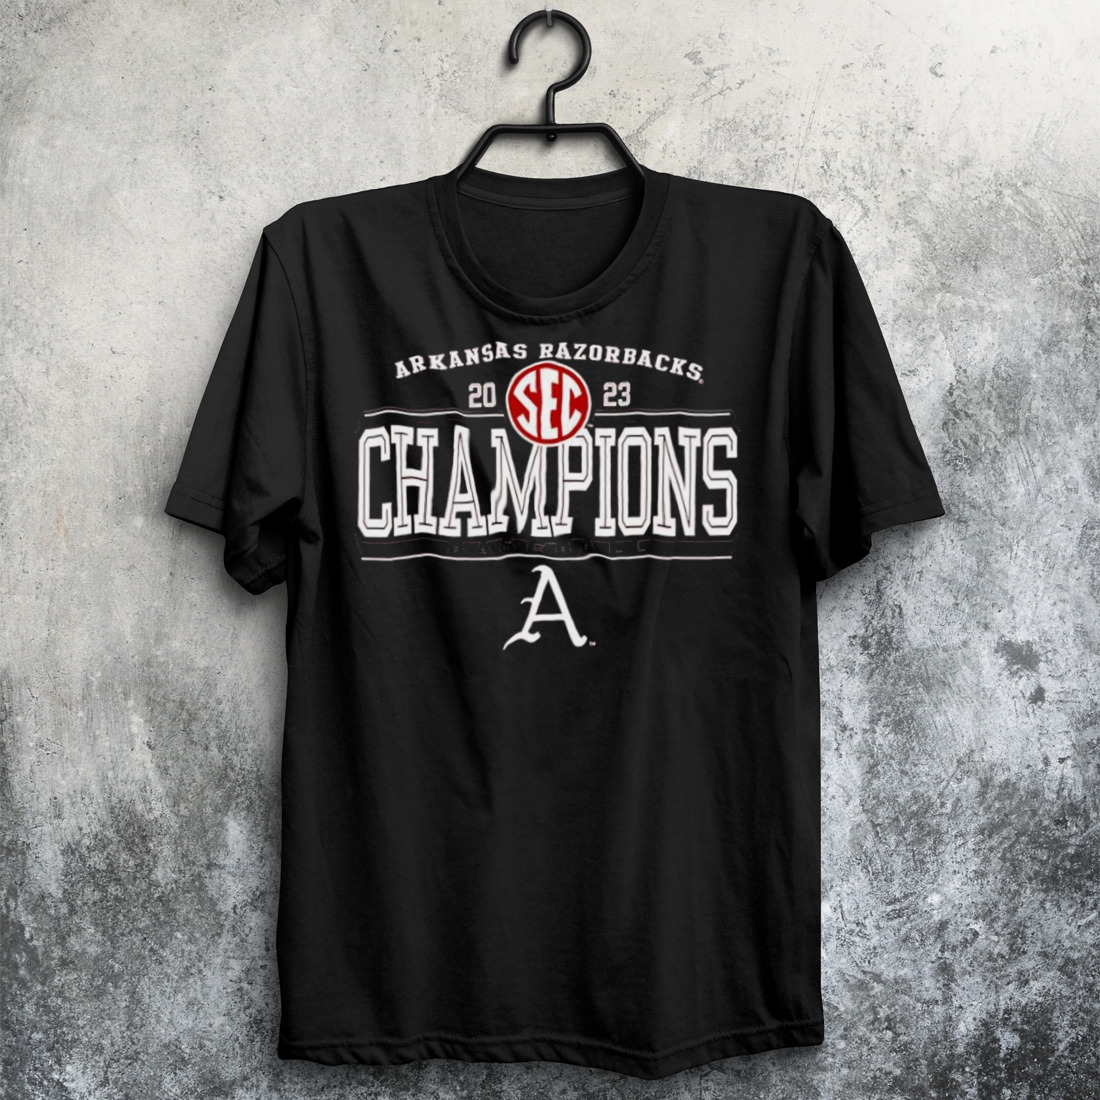 Arkansas Razorbacks Season Champions 2023 SEC Baseball shirt